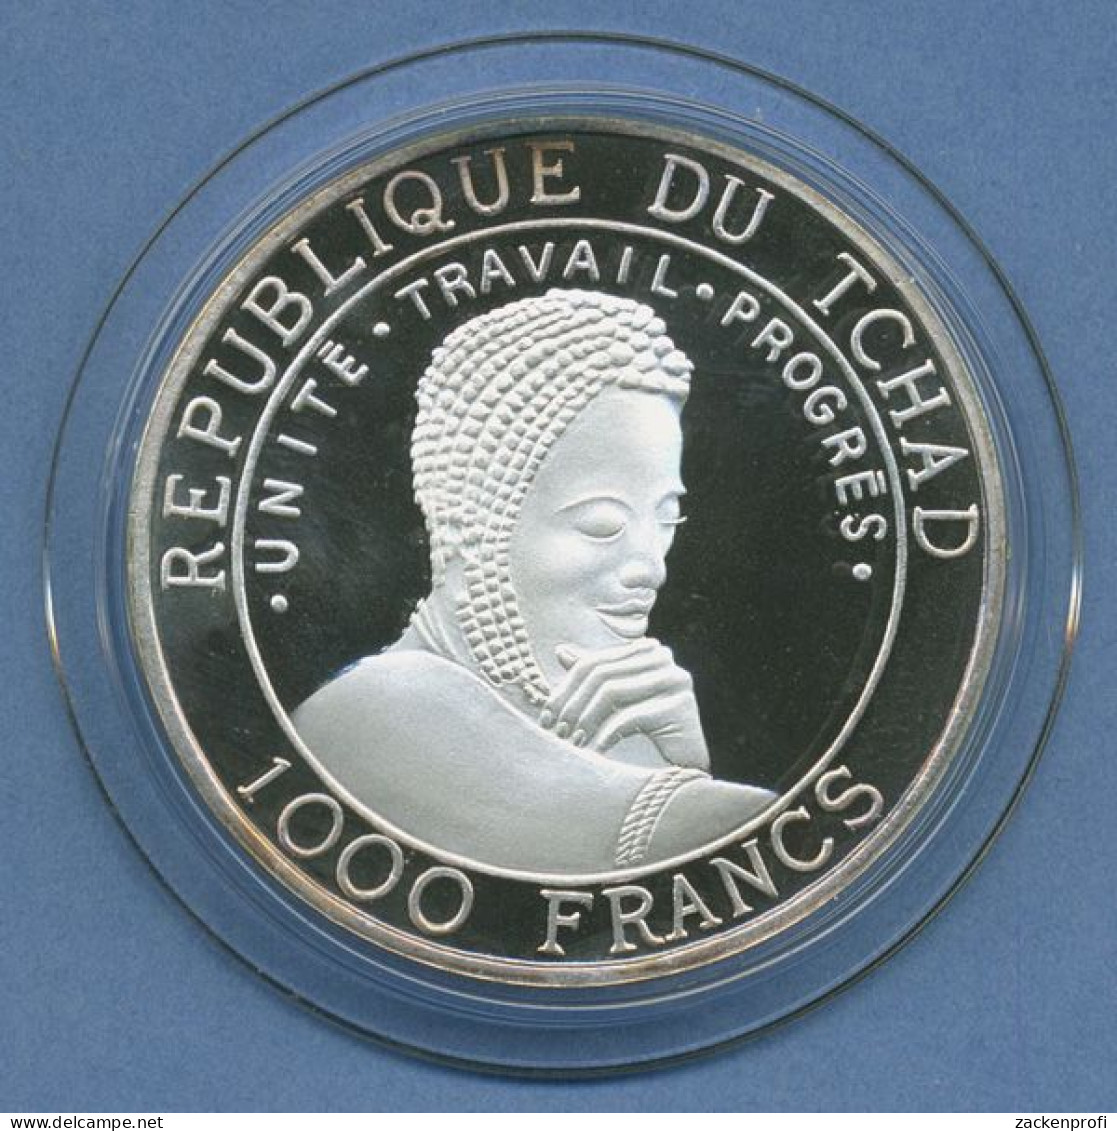 Tschad 1000 Francs 2002, Flugzeug Boing, Silber, Farbig, KM 32 PP Kapsel (m4710) - Ciad